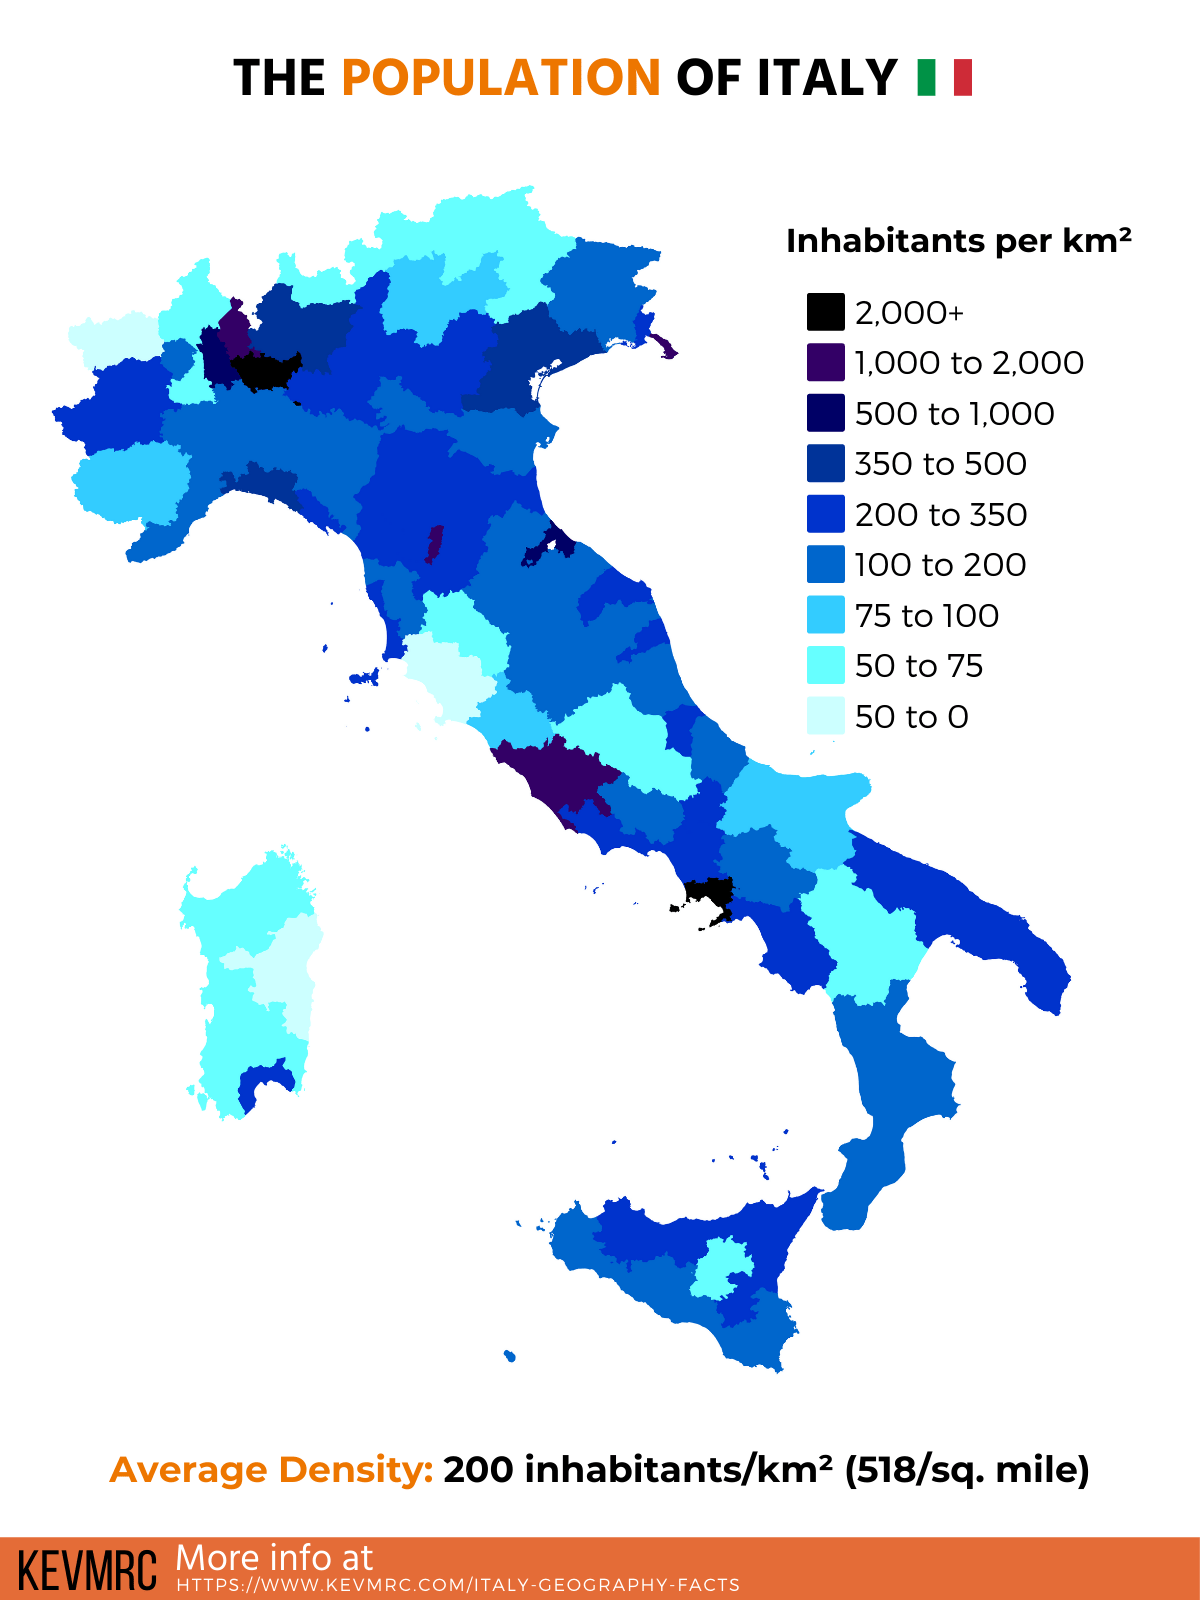 illustration about italian population density